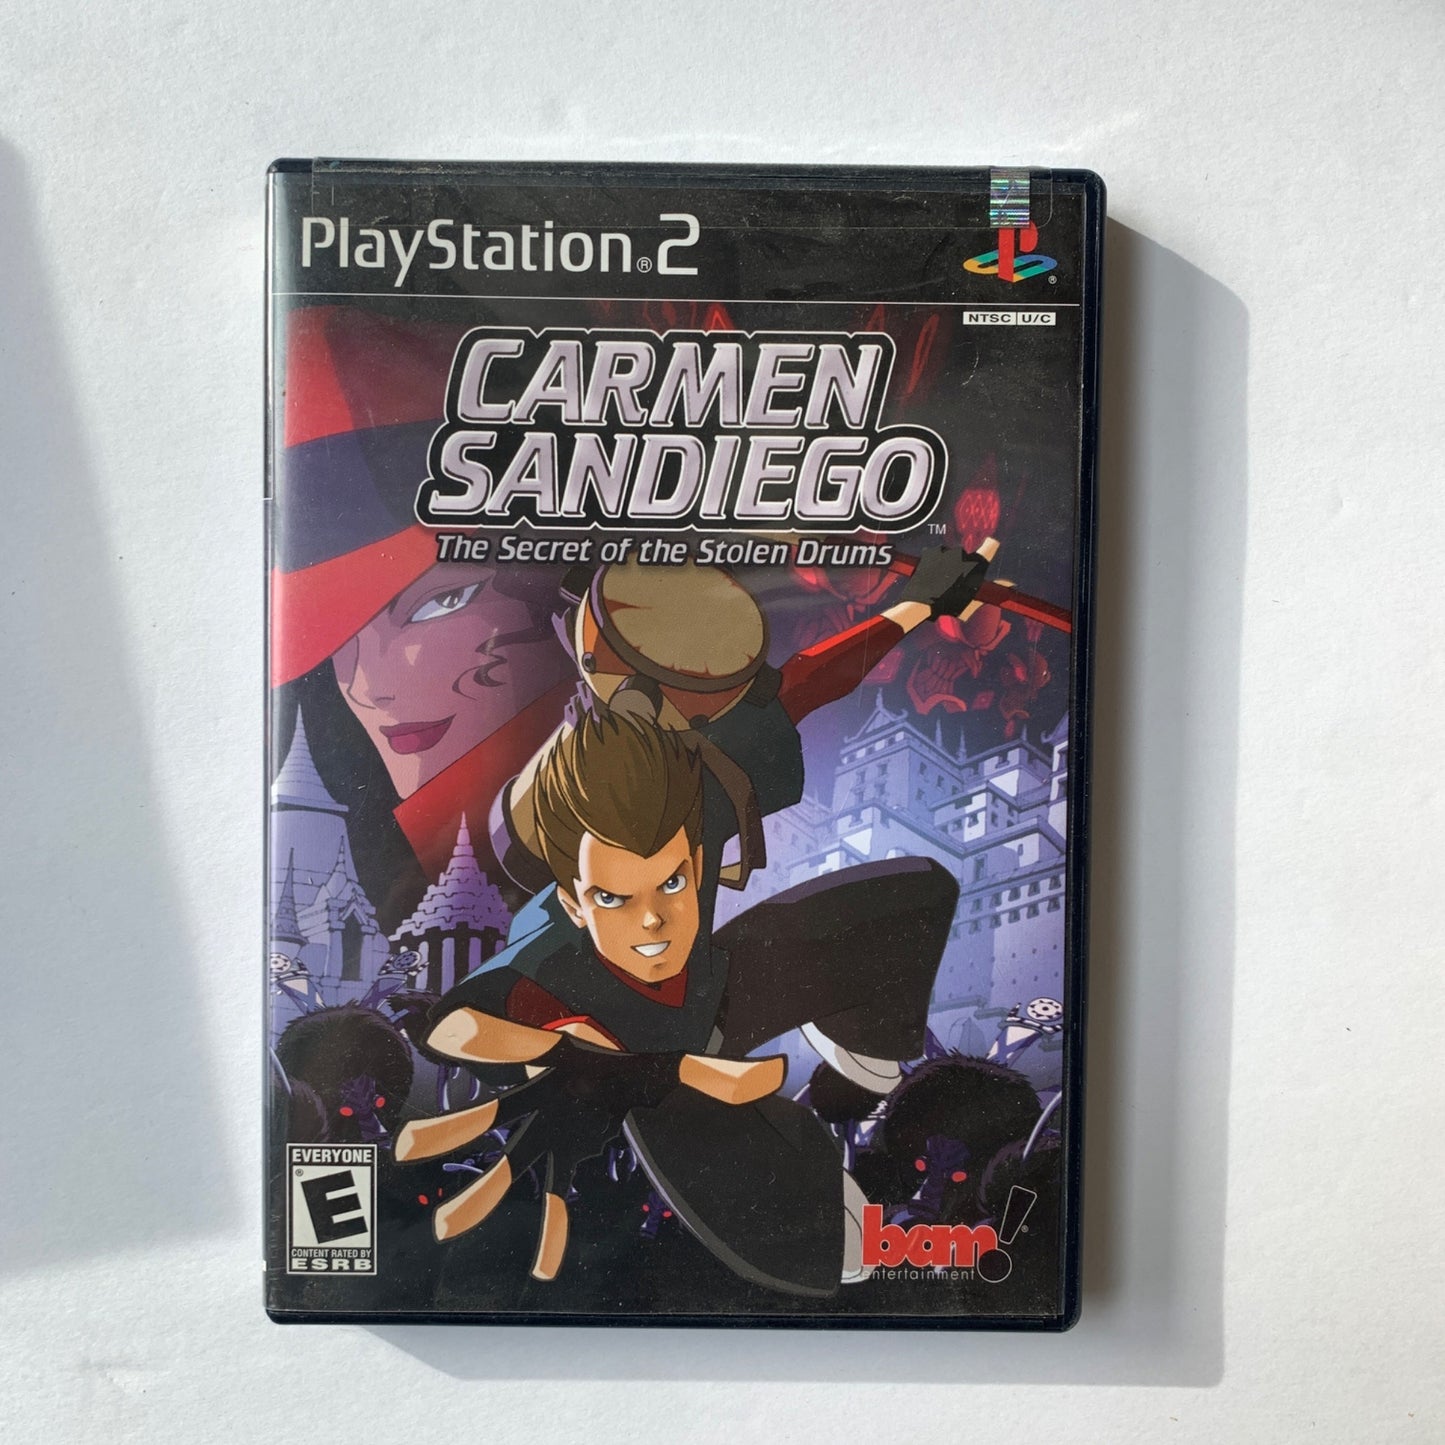 PS2 PlayStation 2 Carmen Sandiego Secret of the Stolen Drums Disc Case Manual